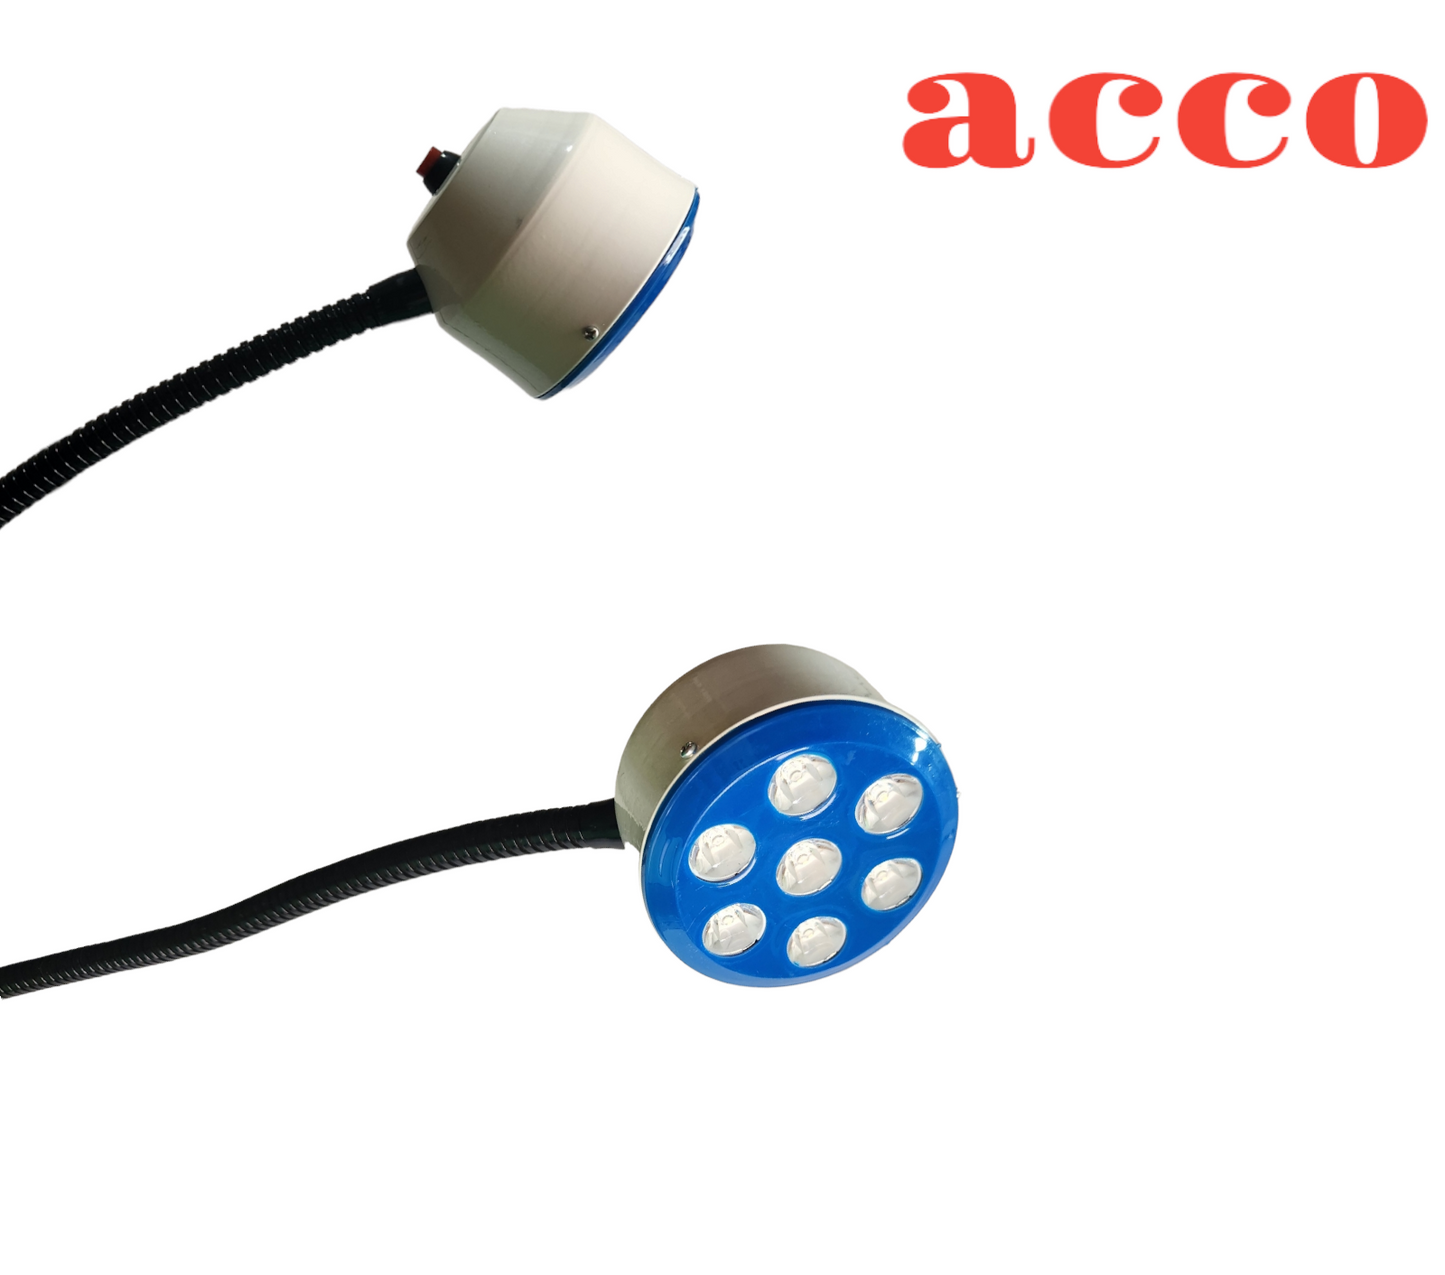 acco Examination OT Light with 7 Led Mobile